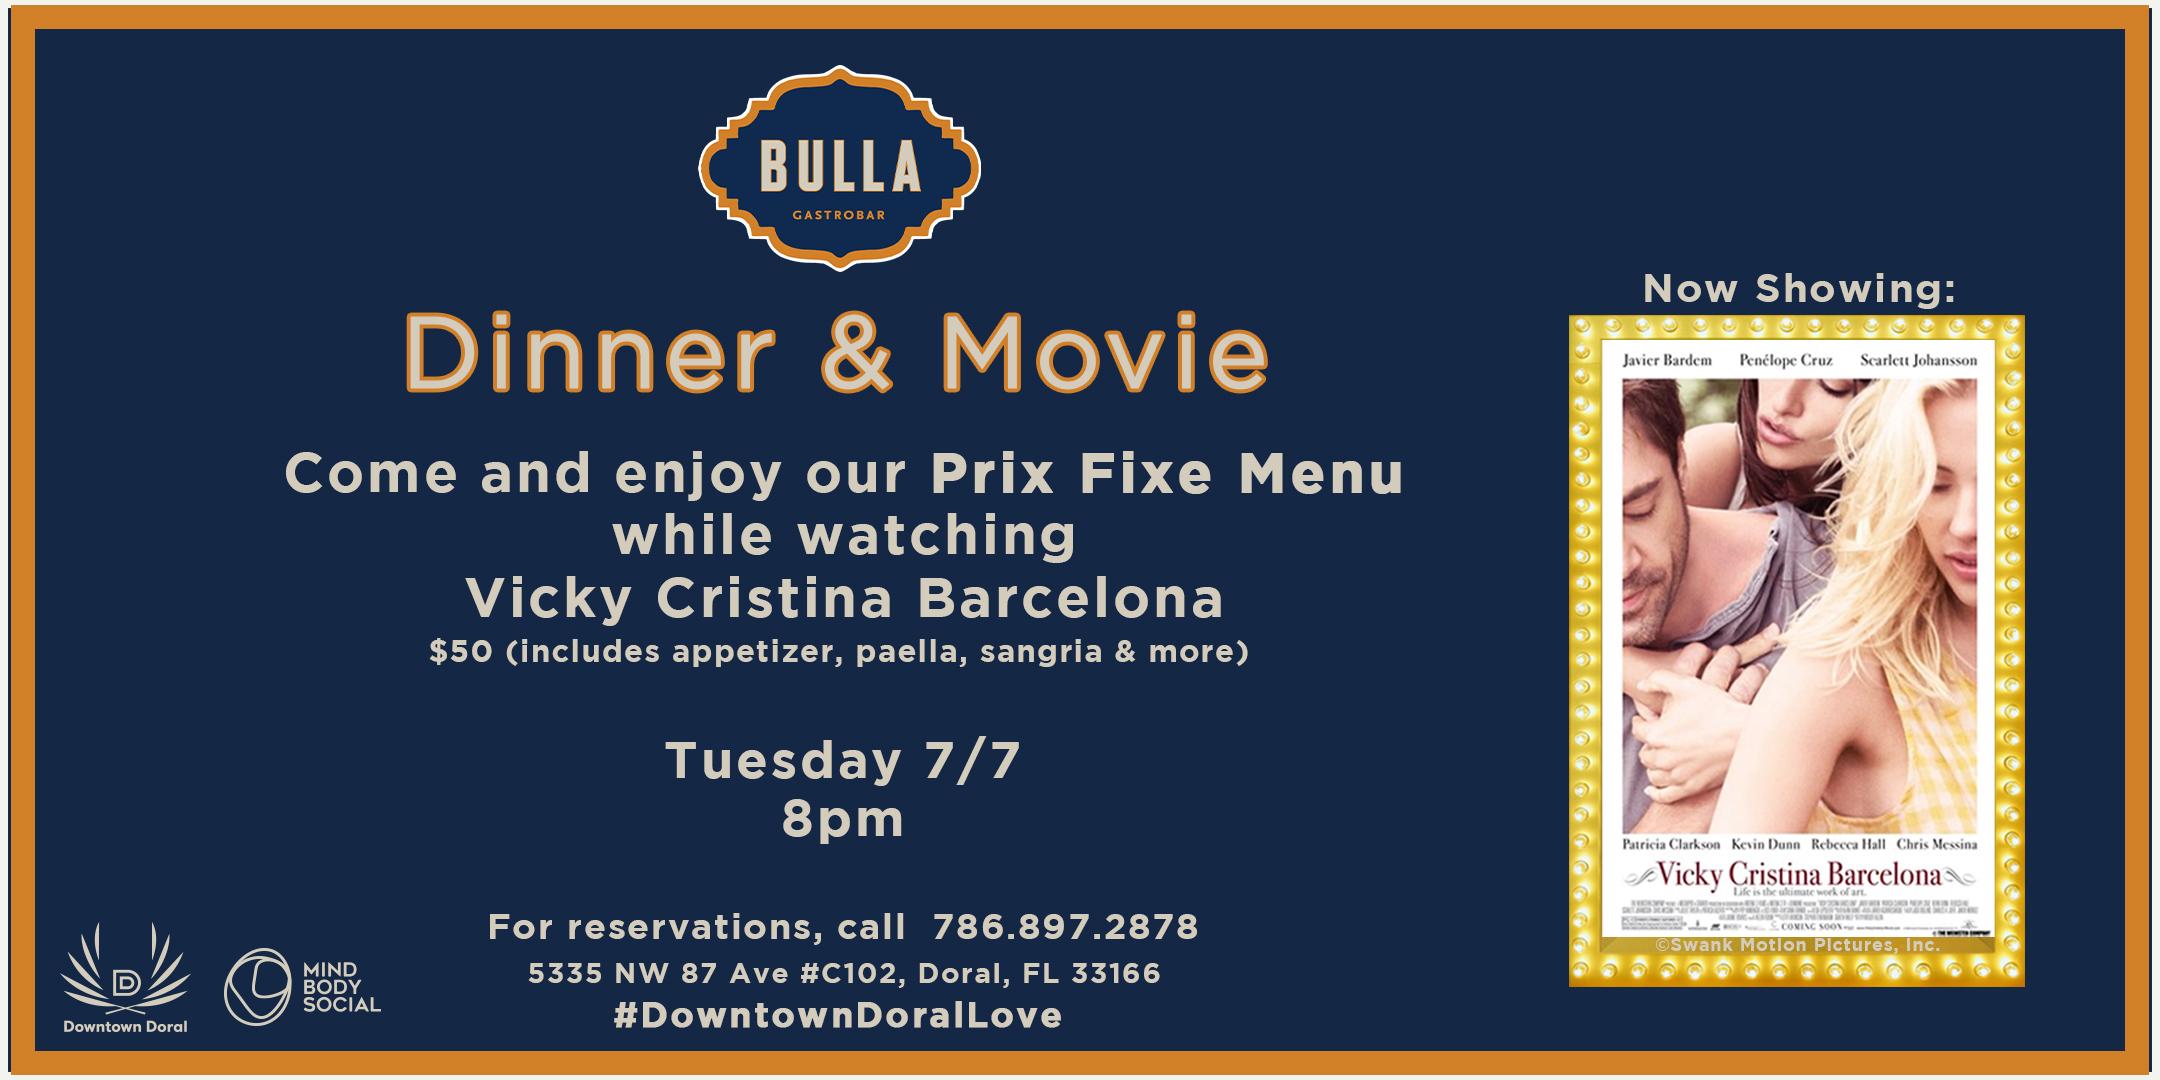 Dinner & Movie at Bulla Gastrobar Downtown Doral